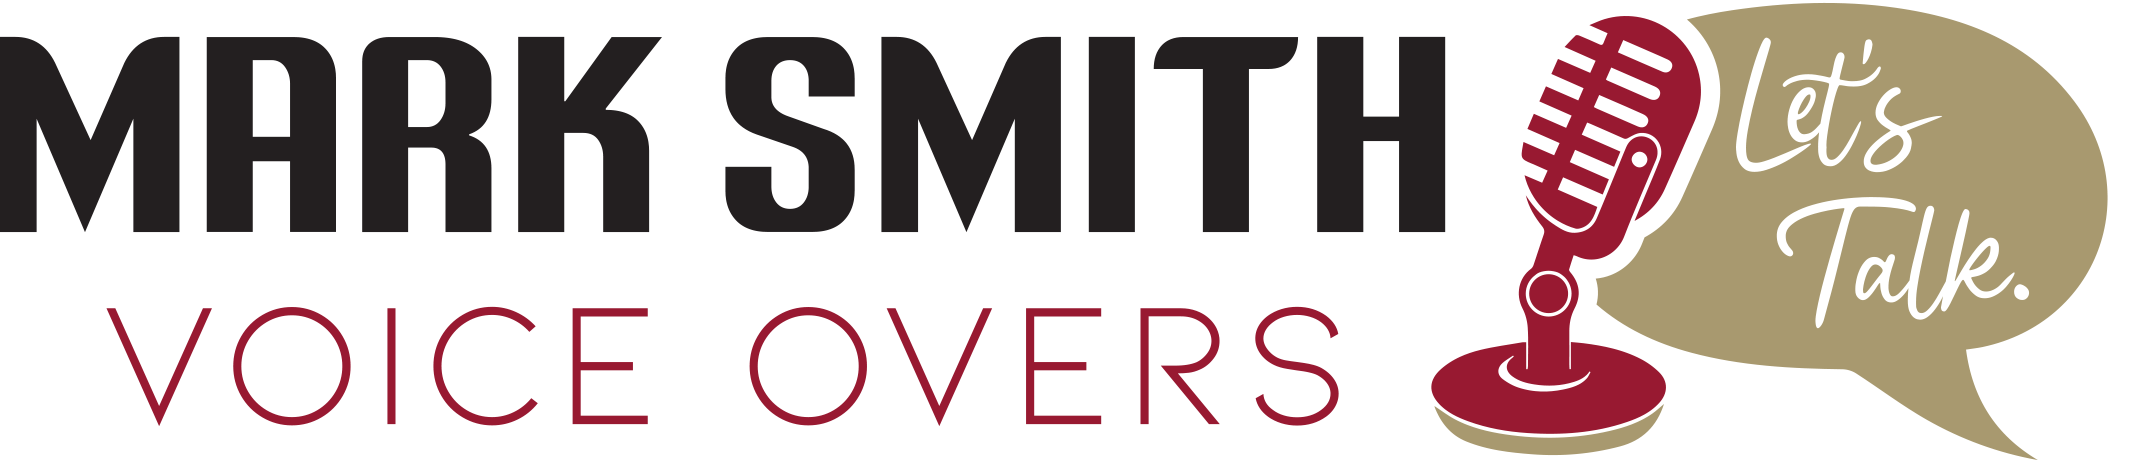 Mark Smith Voice Overs logo